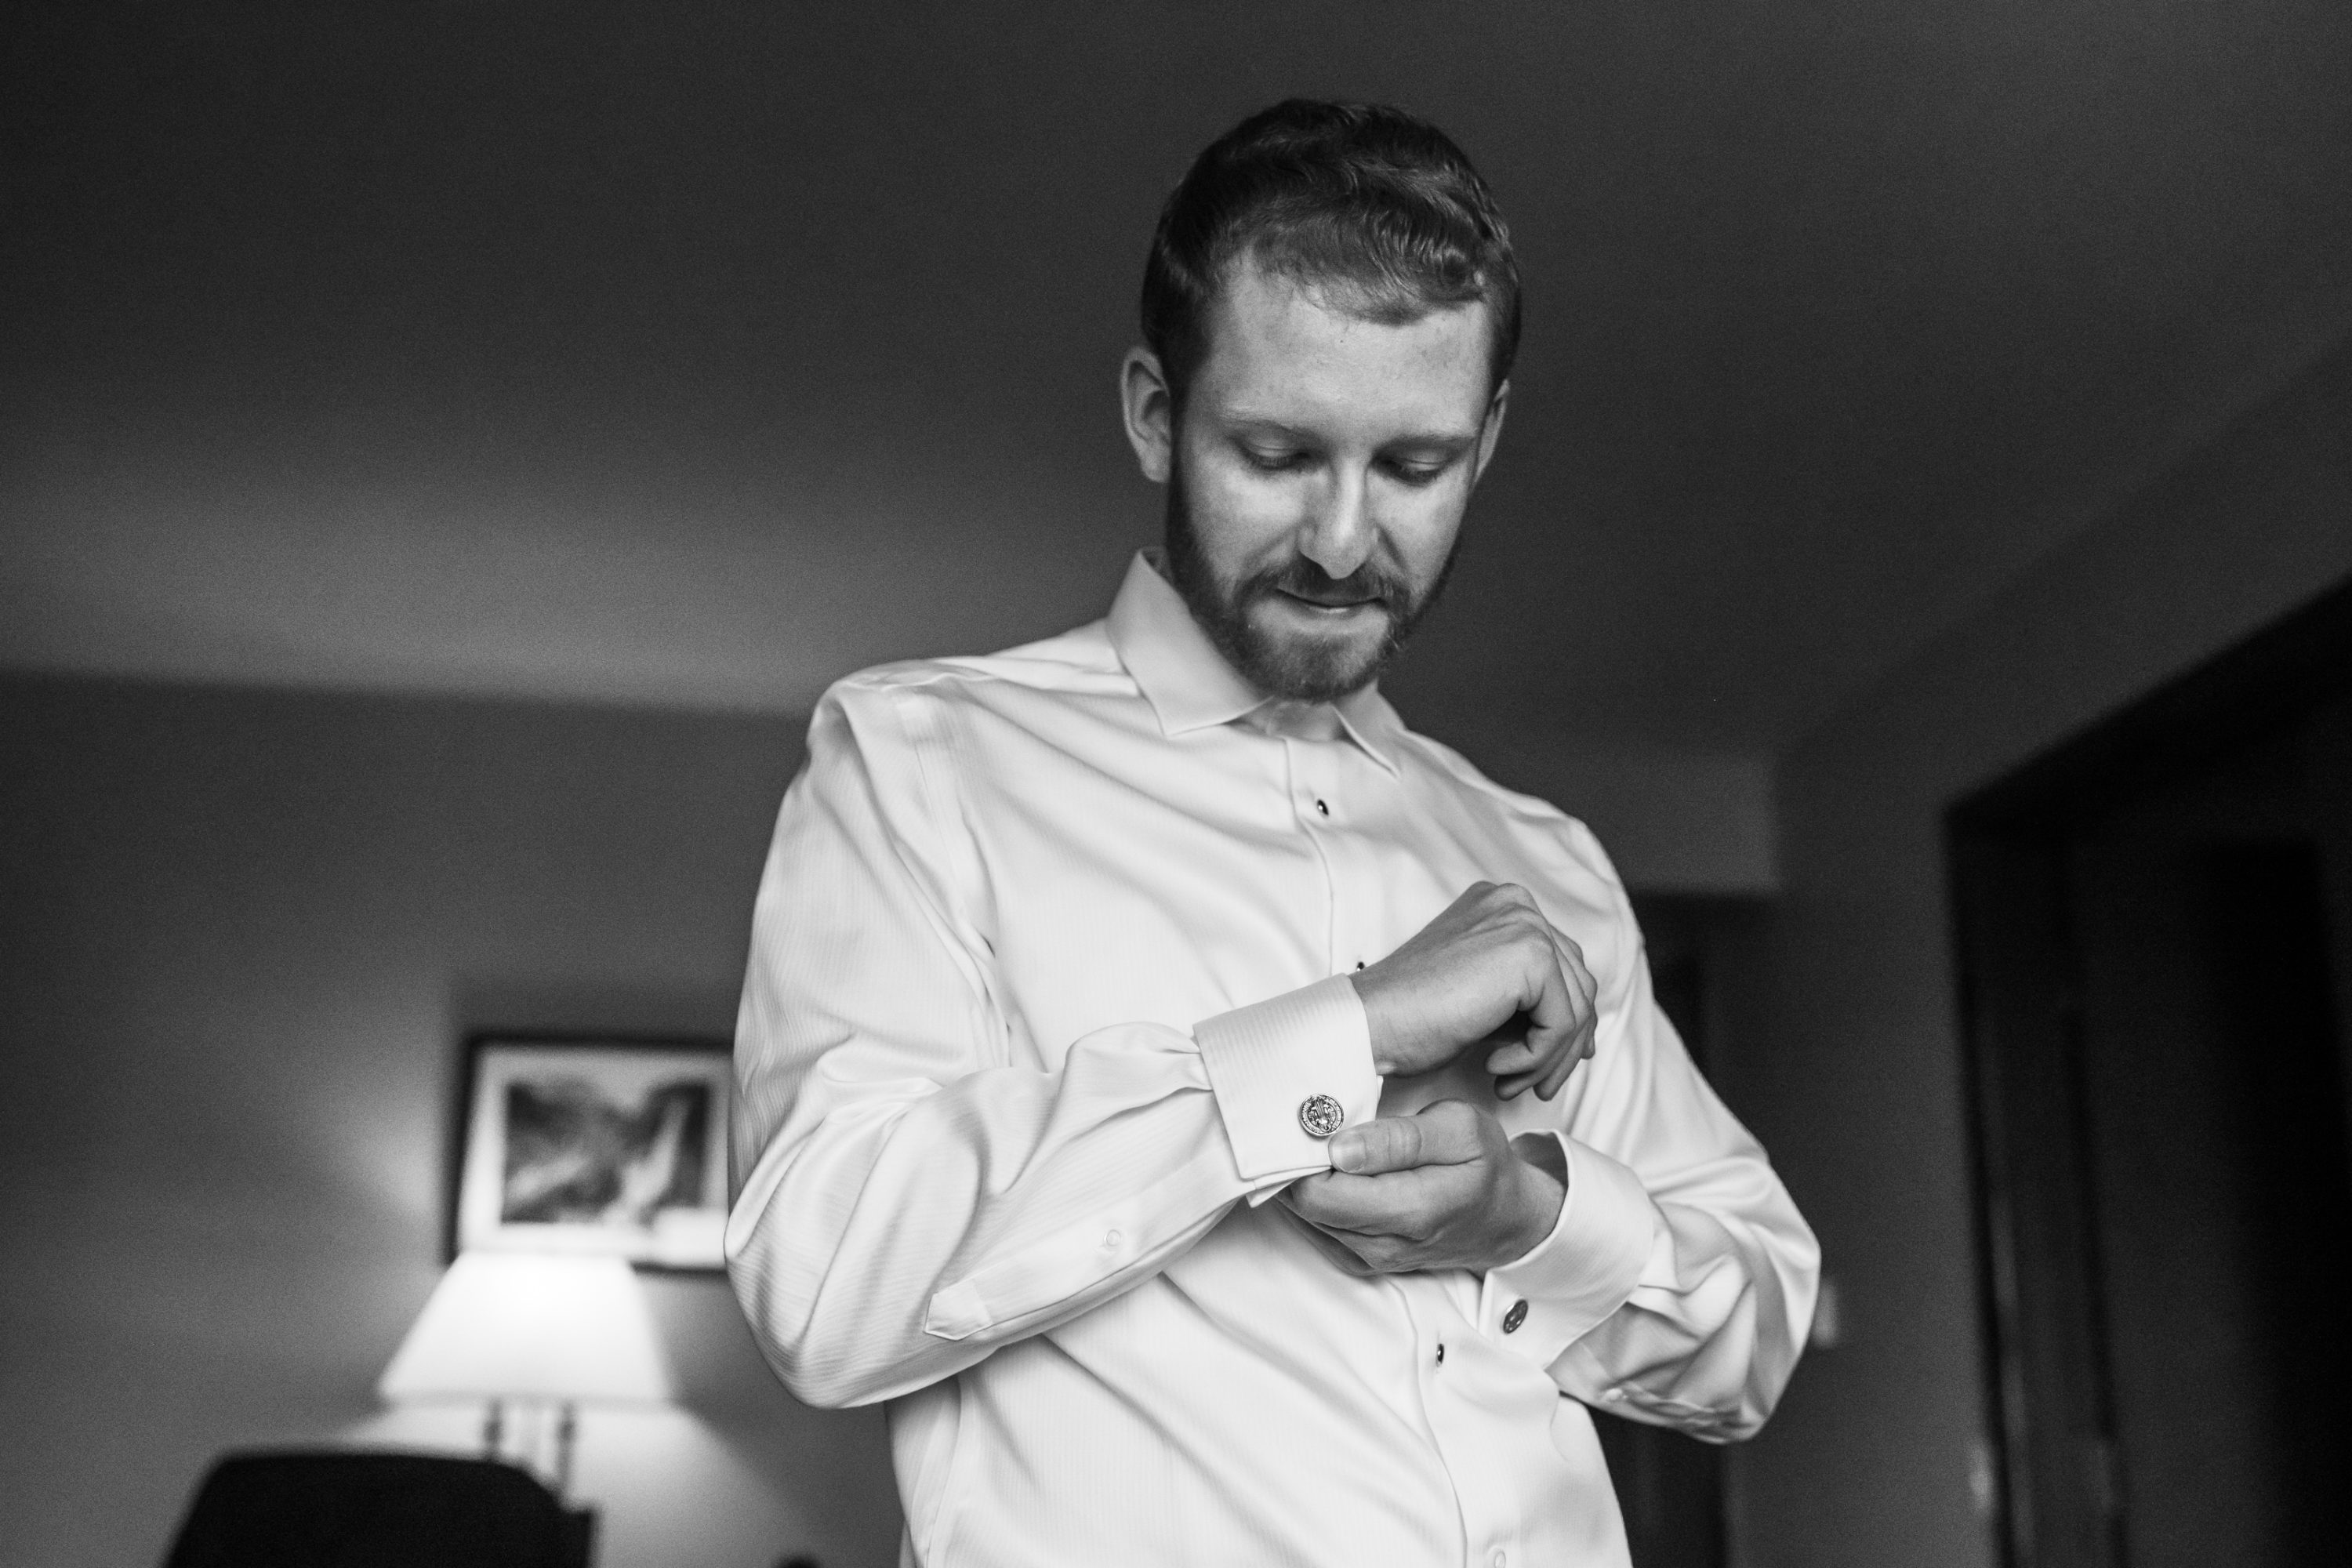 The groom puts in cufflinks before his wedding in Telluride, Colorado.